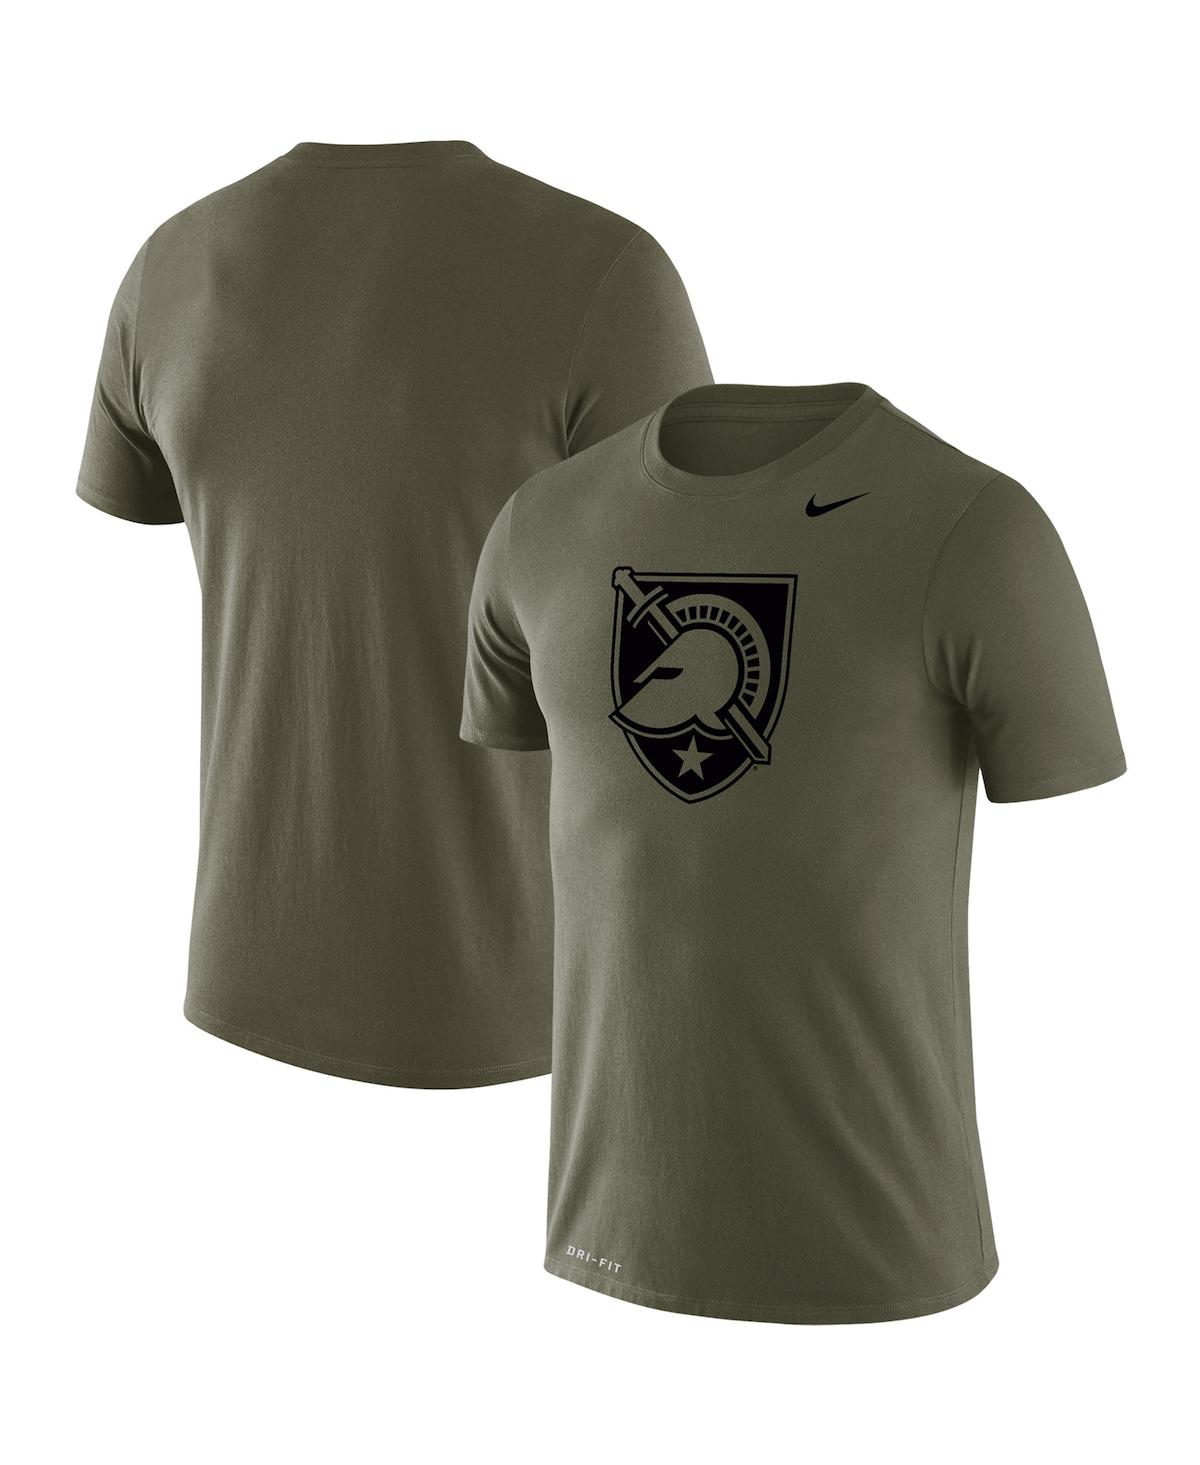 Men's Nike Olive Army Black Knights Tonal Logo Legend Performance T-shirt